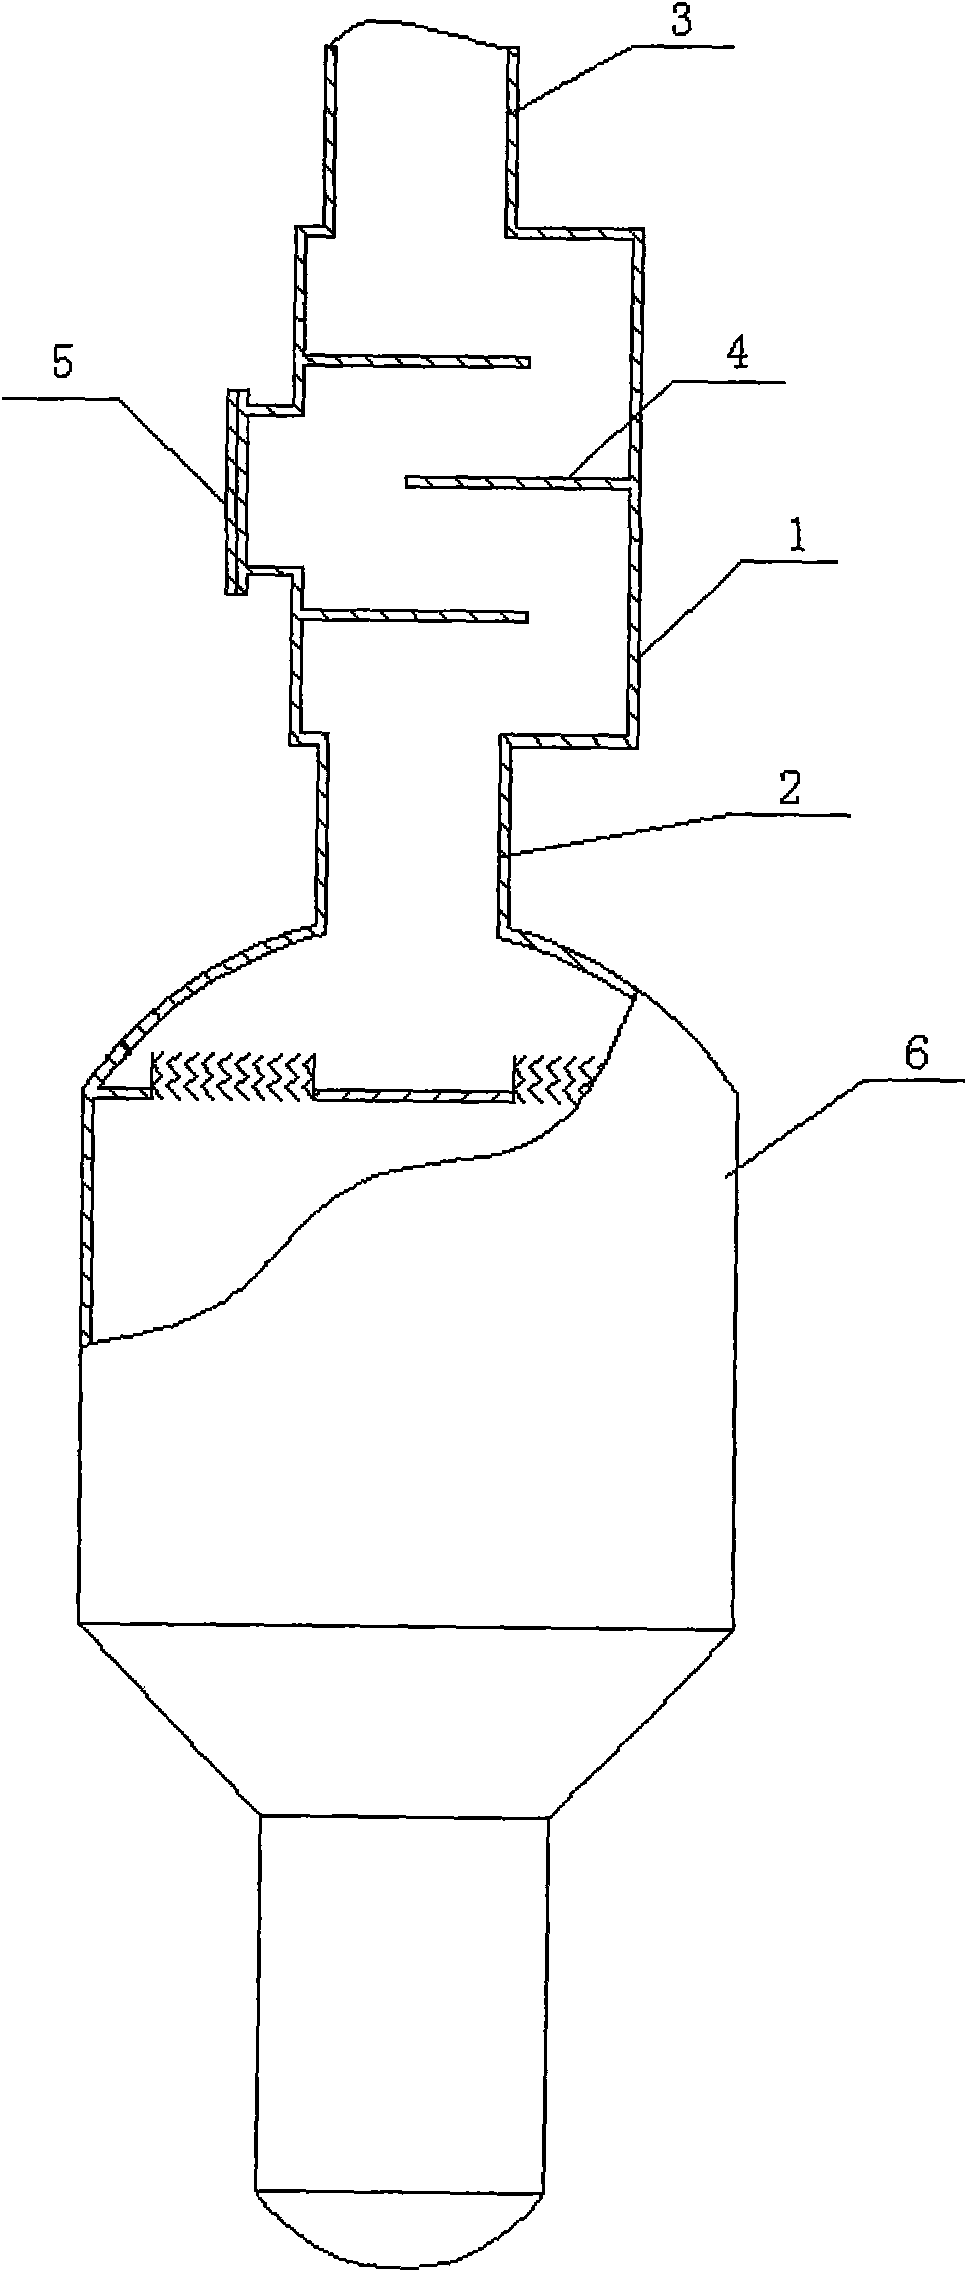 Multilevel defoaming method of evaporator